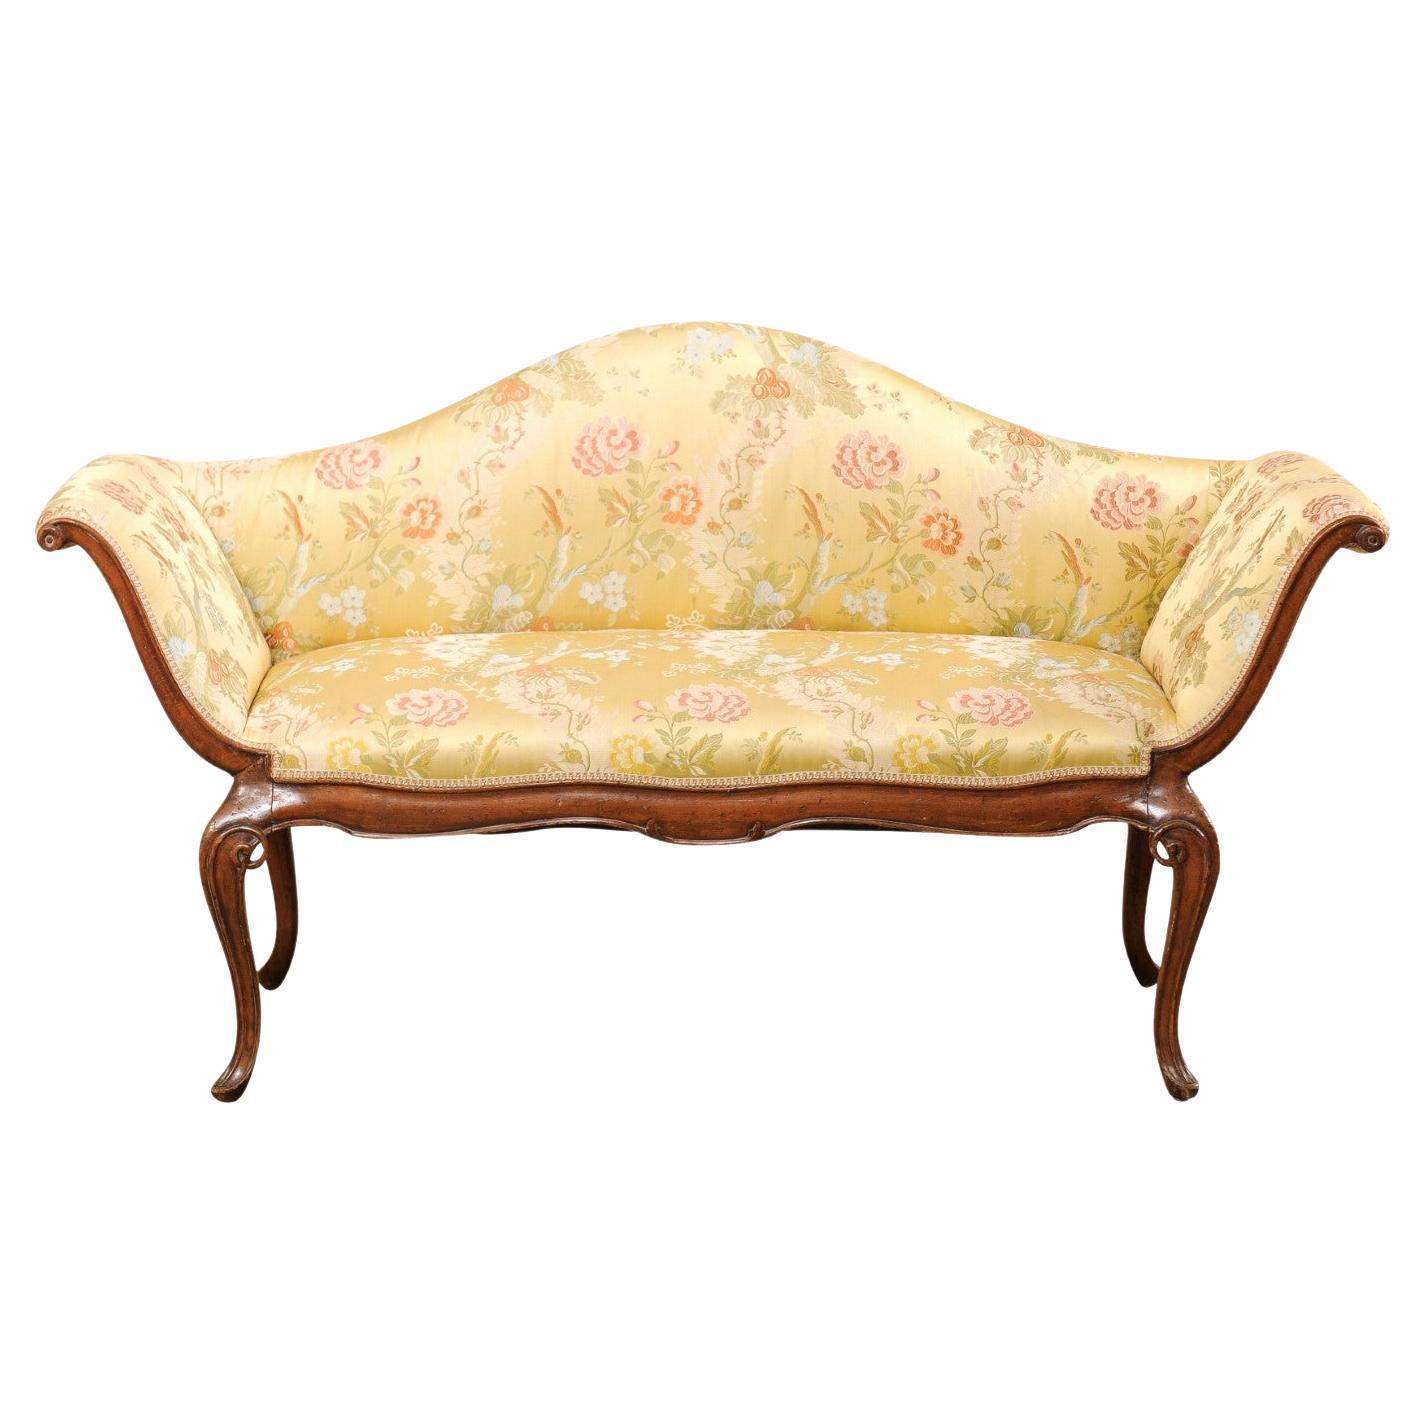 Elegant Italian Venetian Style Sofa, Early 19th C For Sale